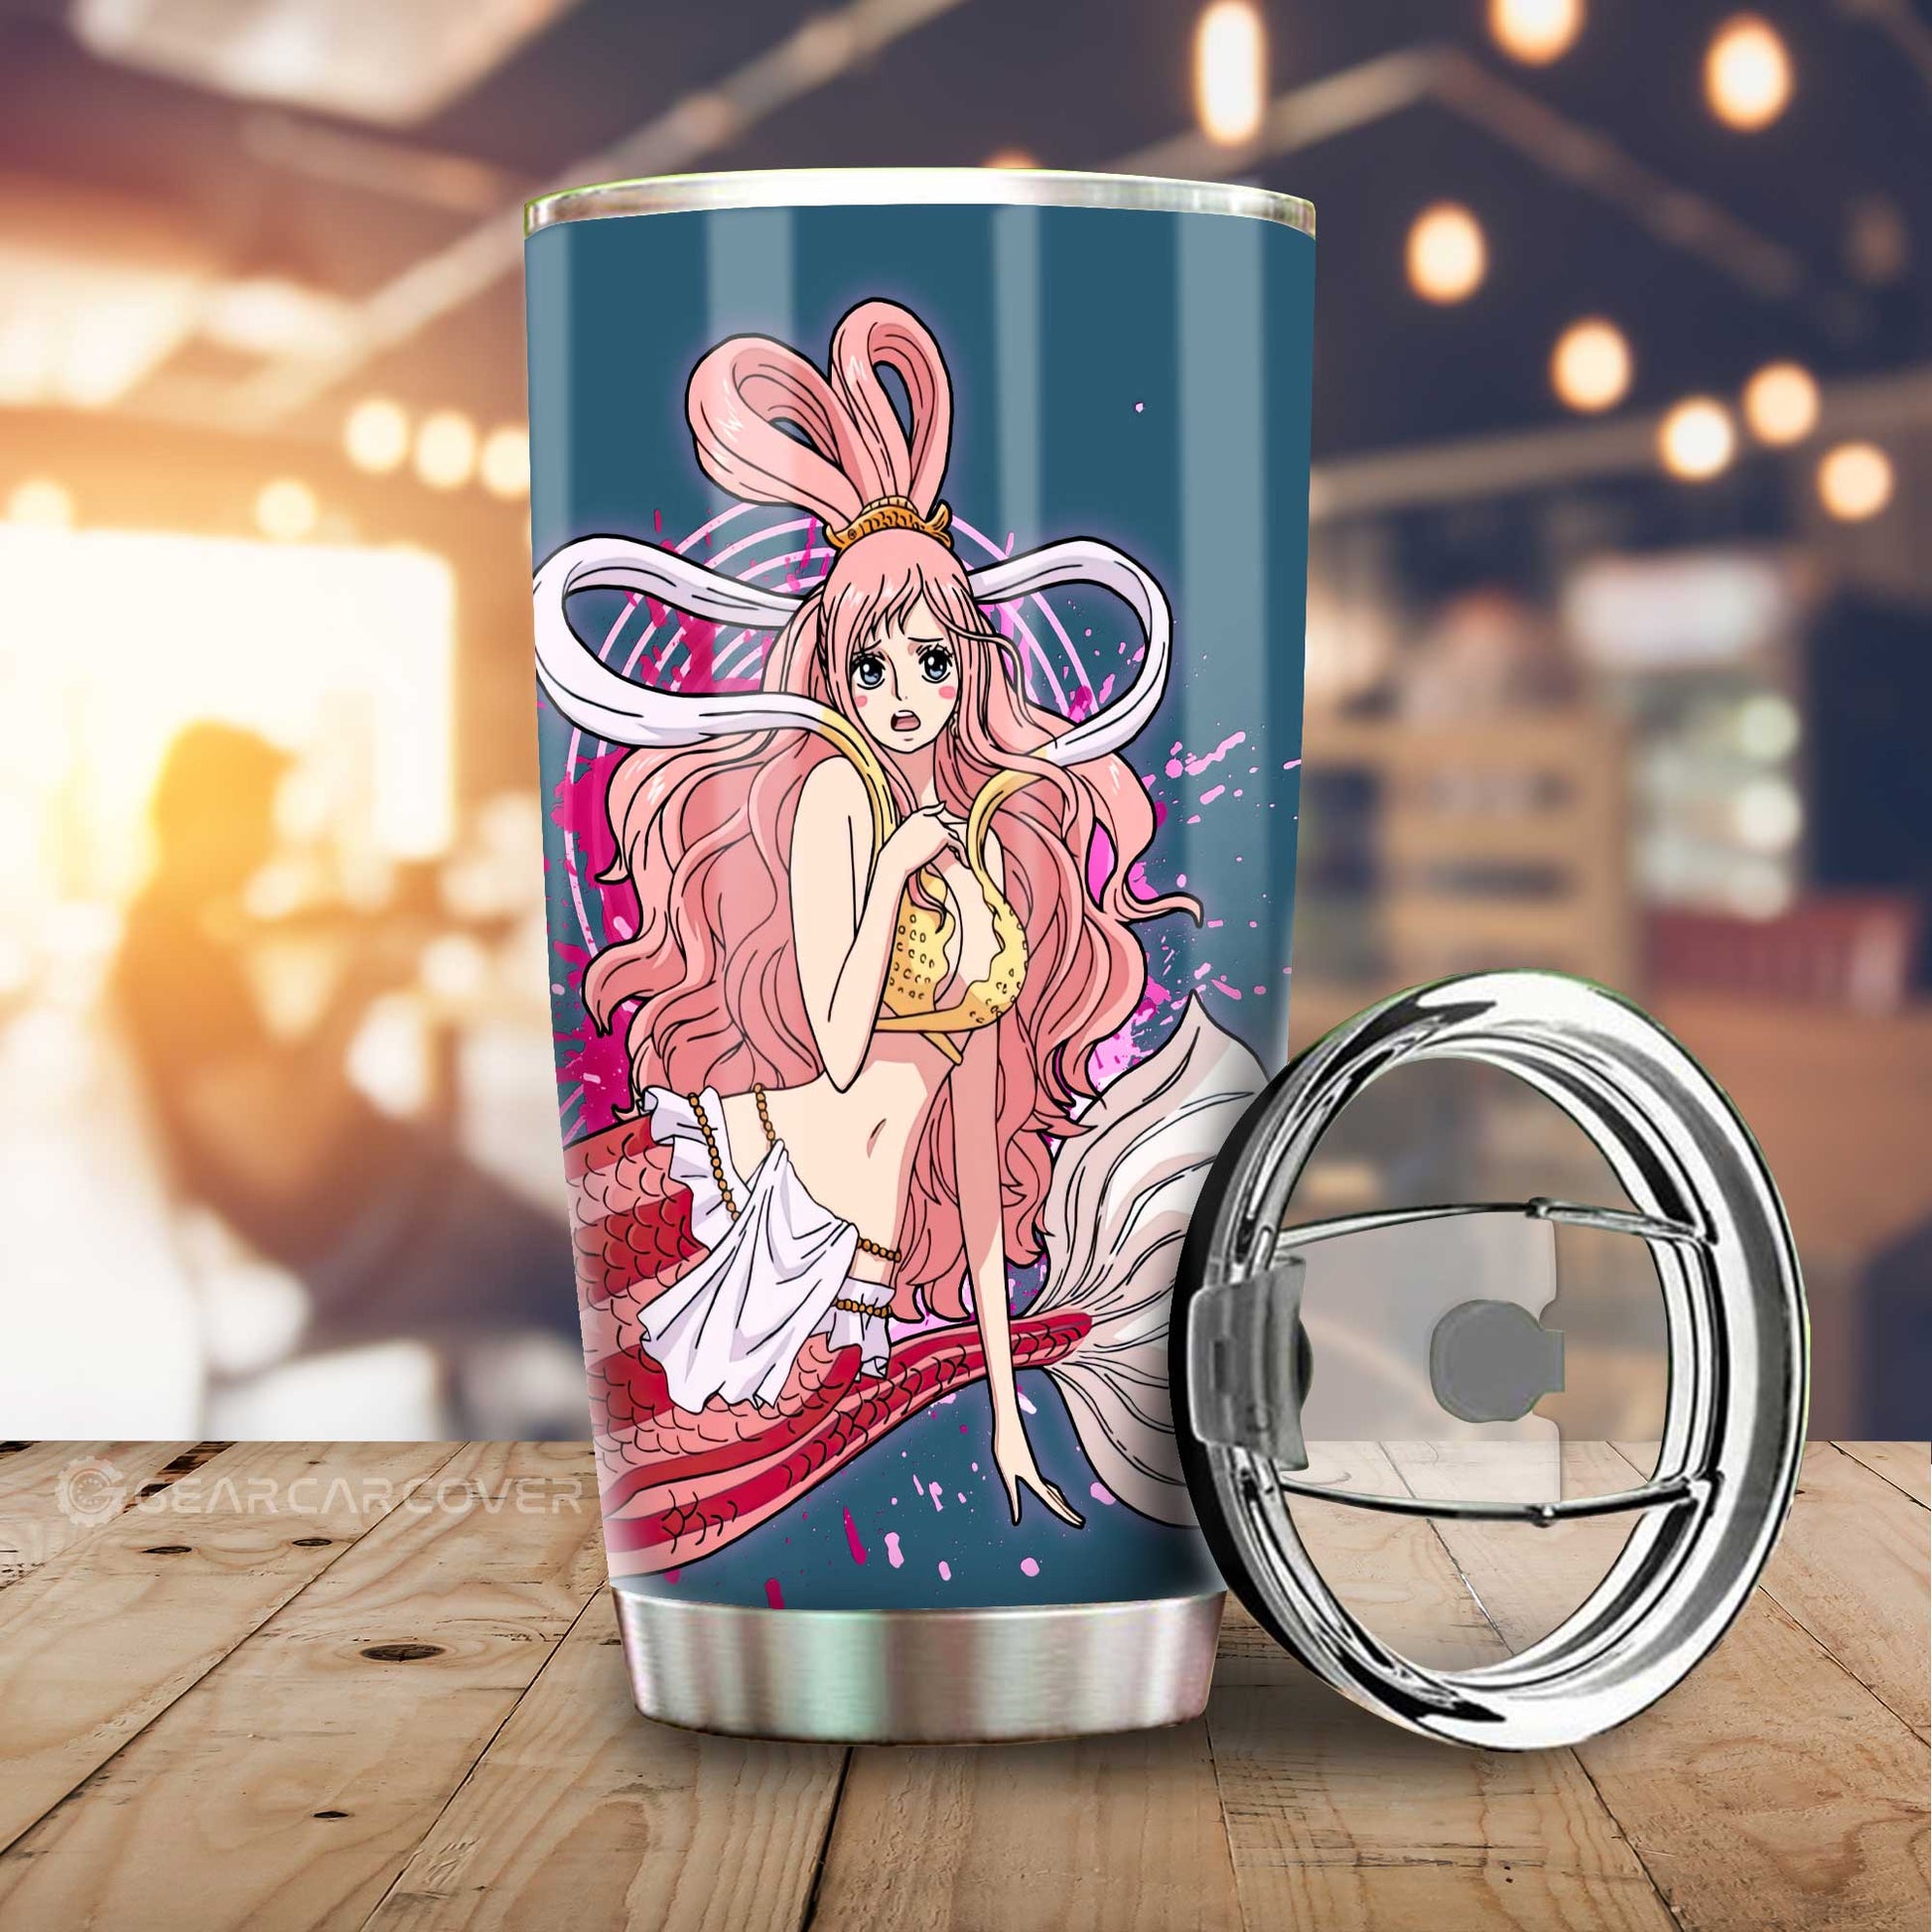 Anime Waifu Girl Vinsmoke Reiju Tumbler Cup Custom One Piece Anime Car Accessories - Gearcarcover - 1